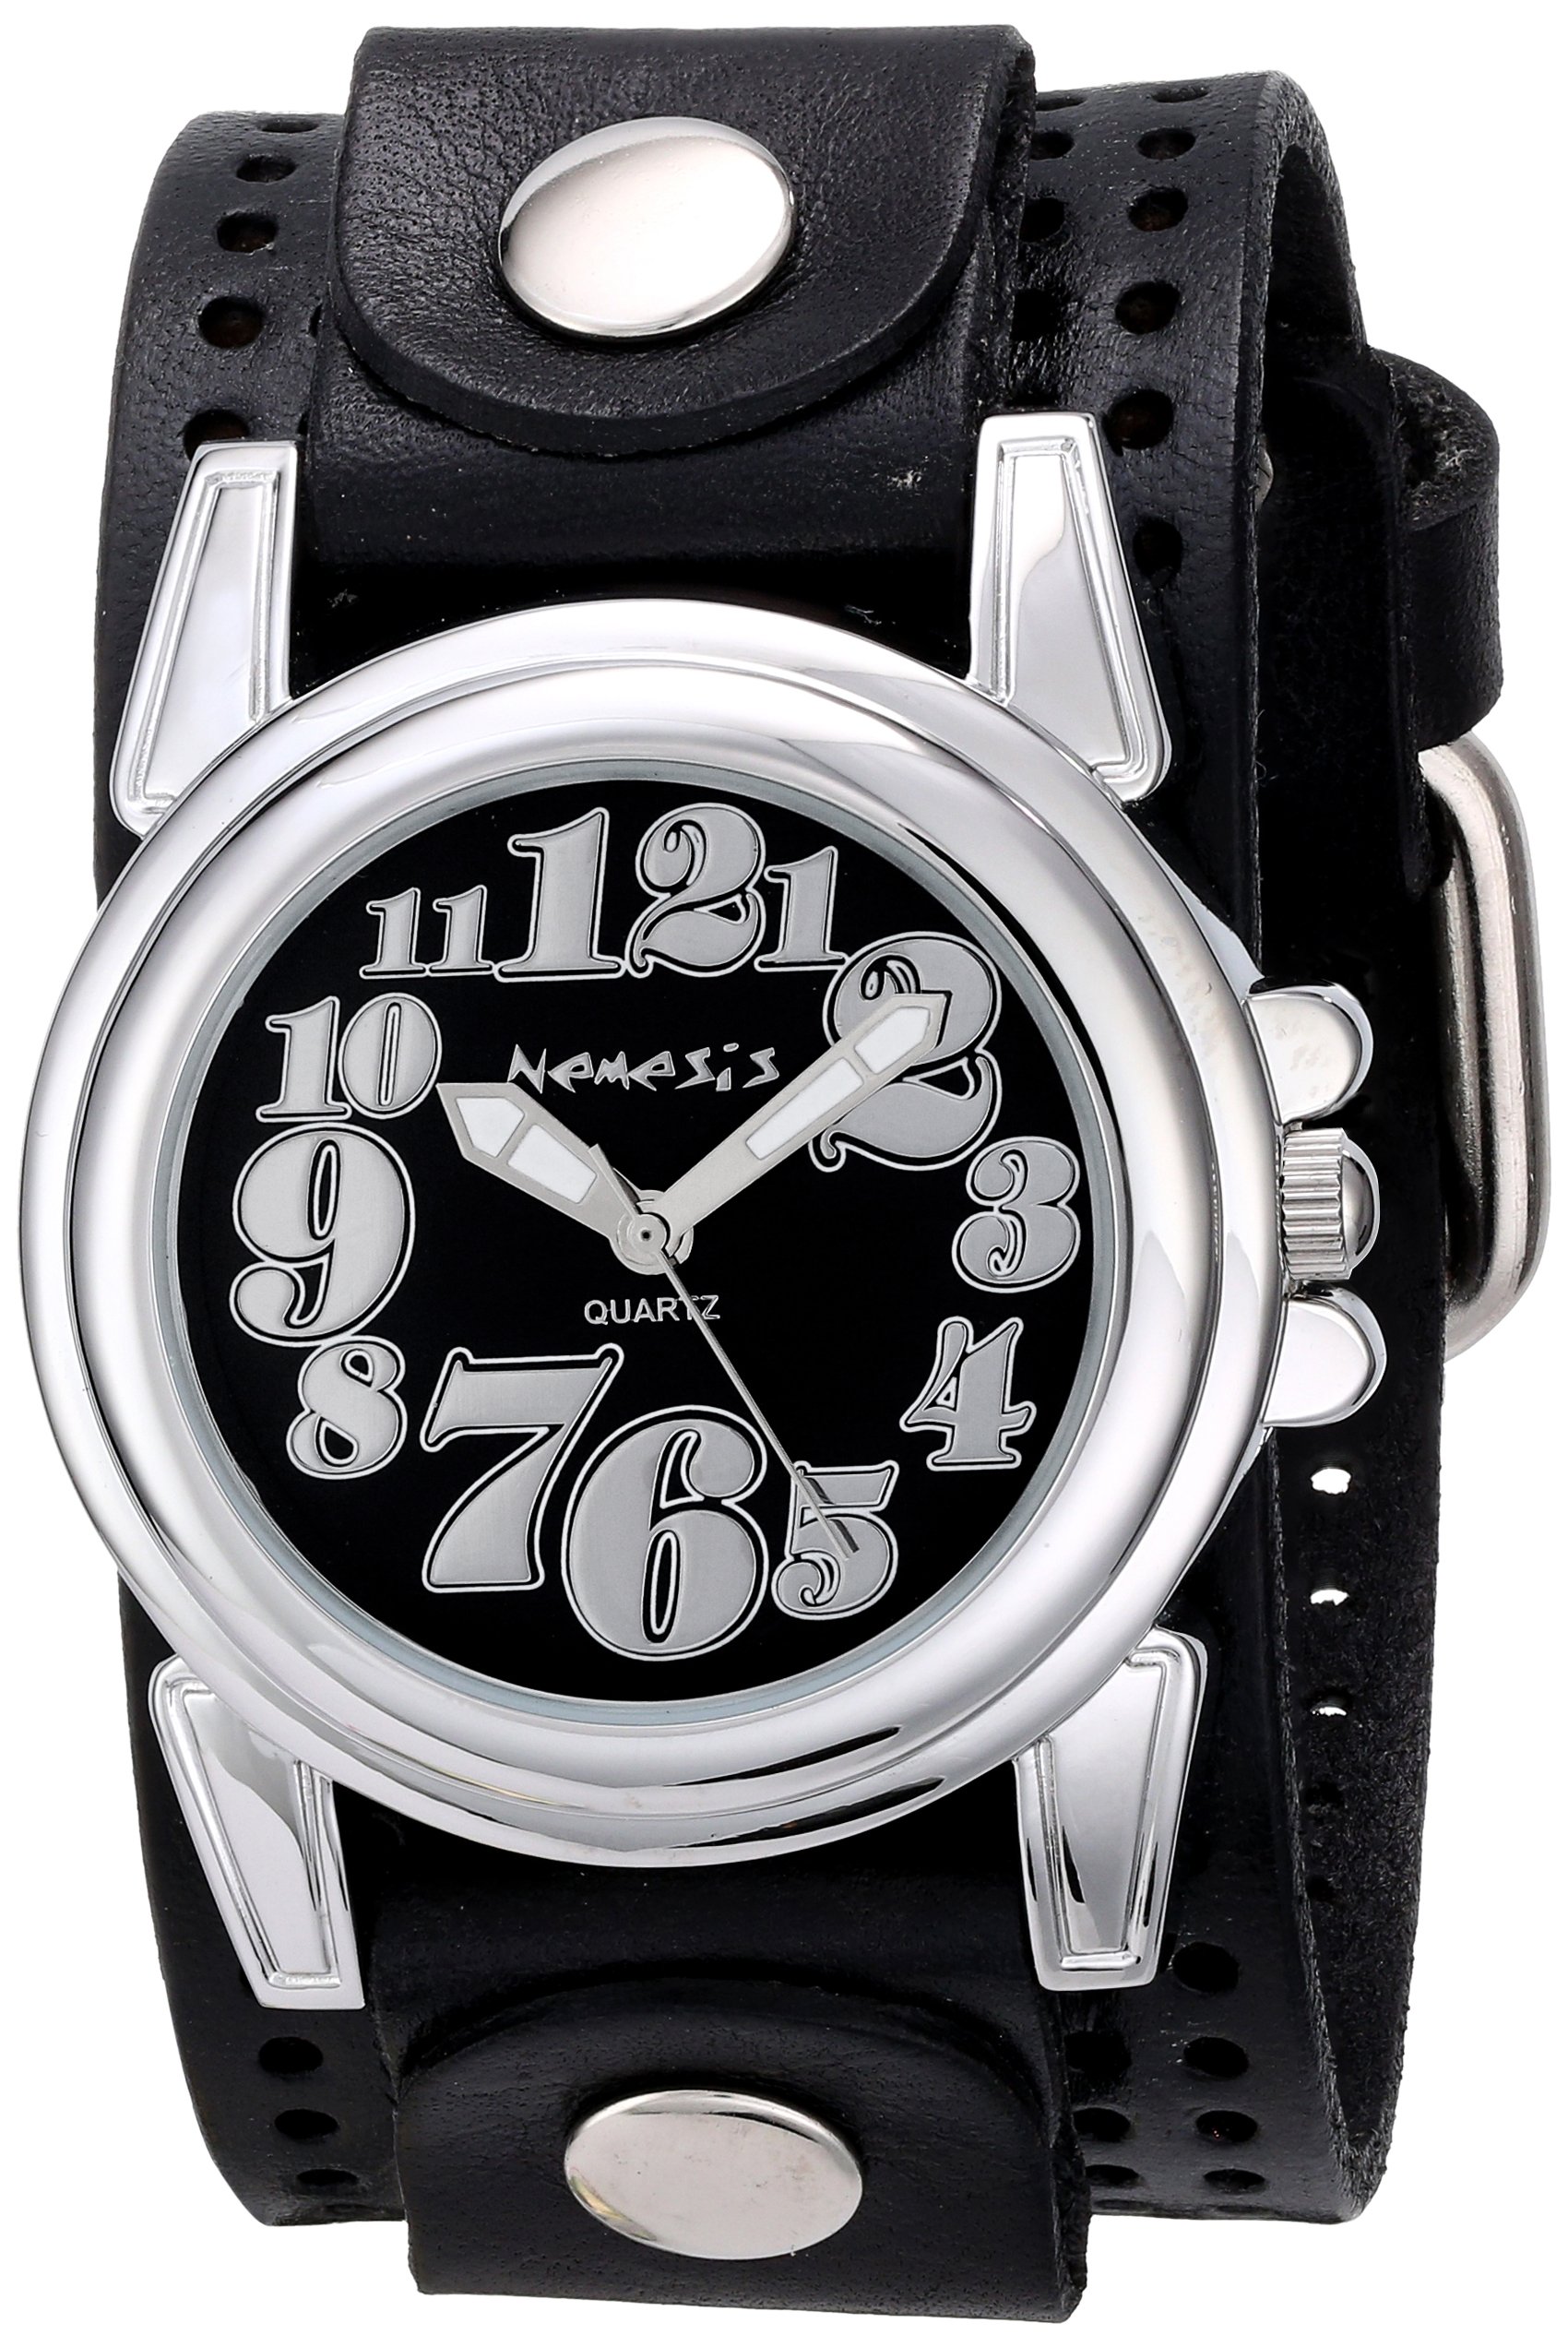 Nemesis Women's 069PLB-K Trendy Oversized Series Analog Display Japanese Quartz Black Watch